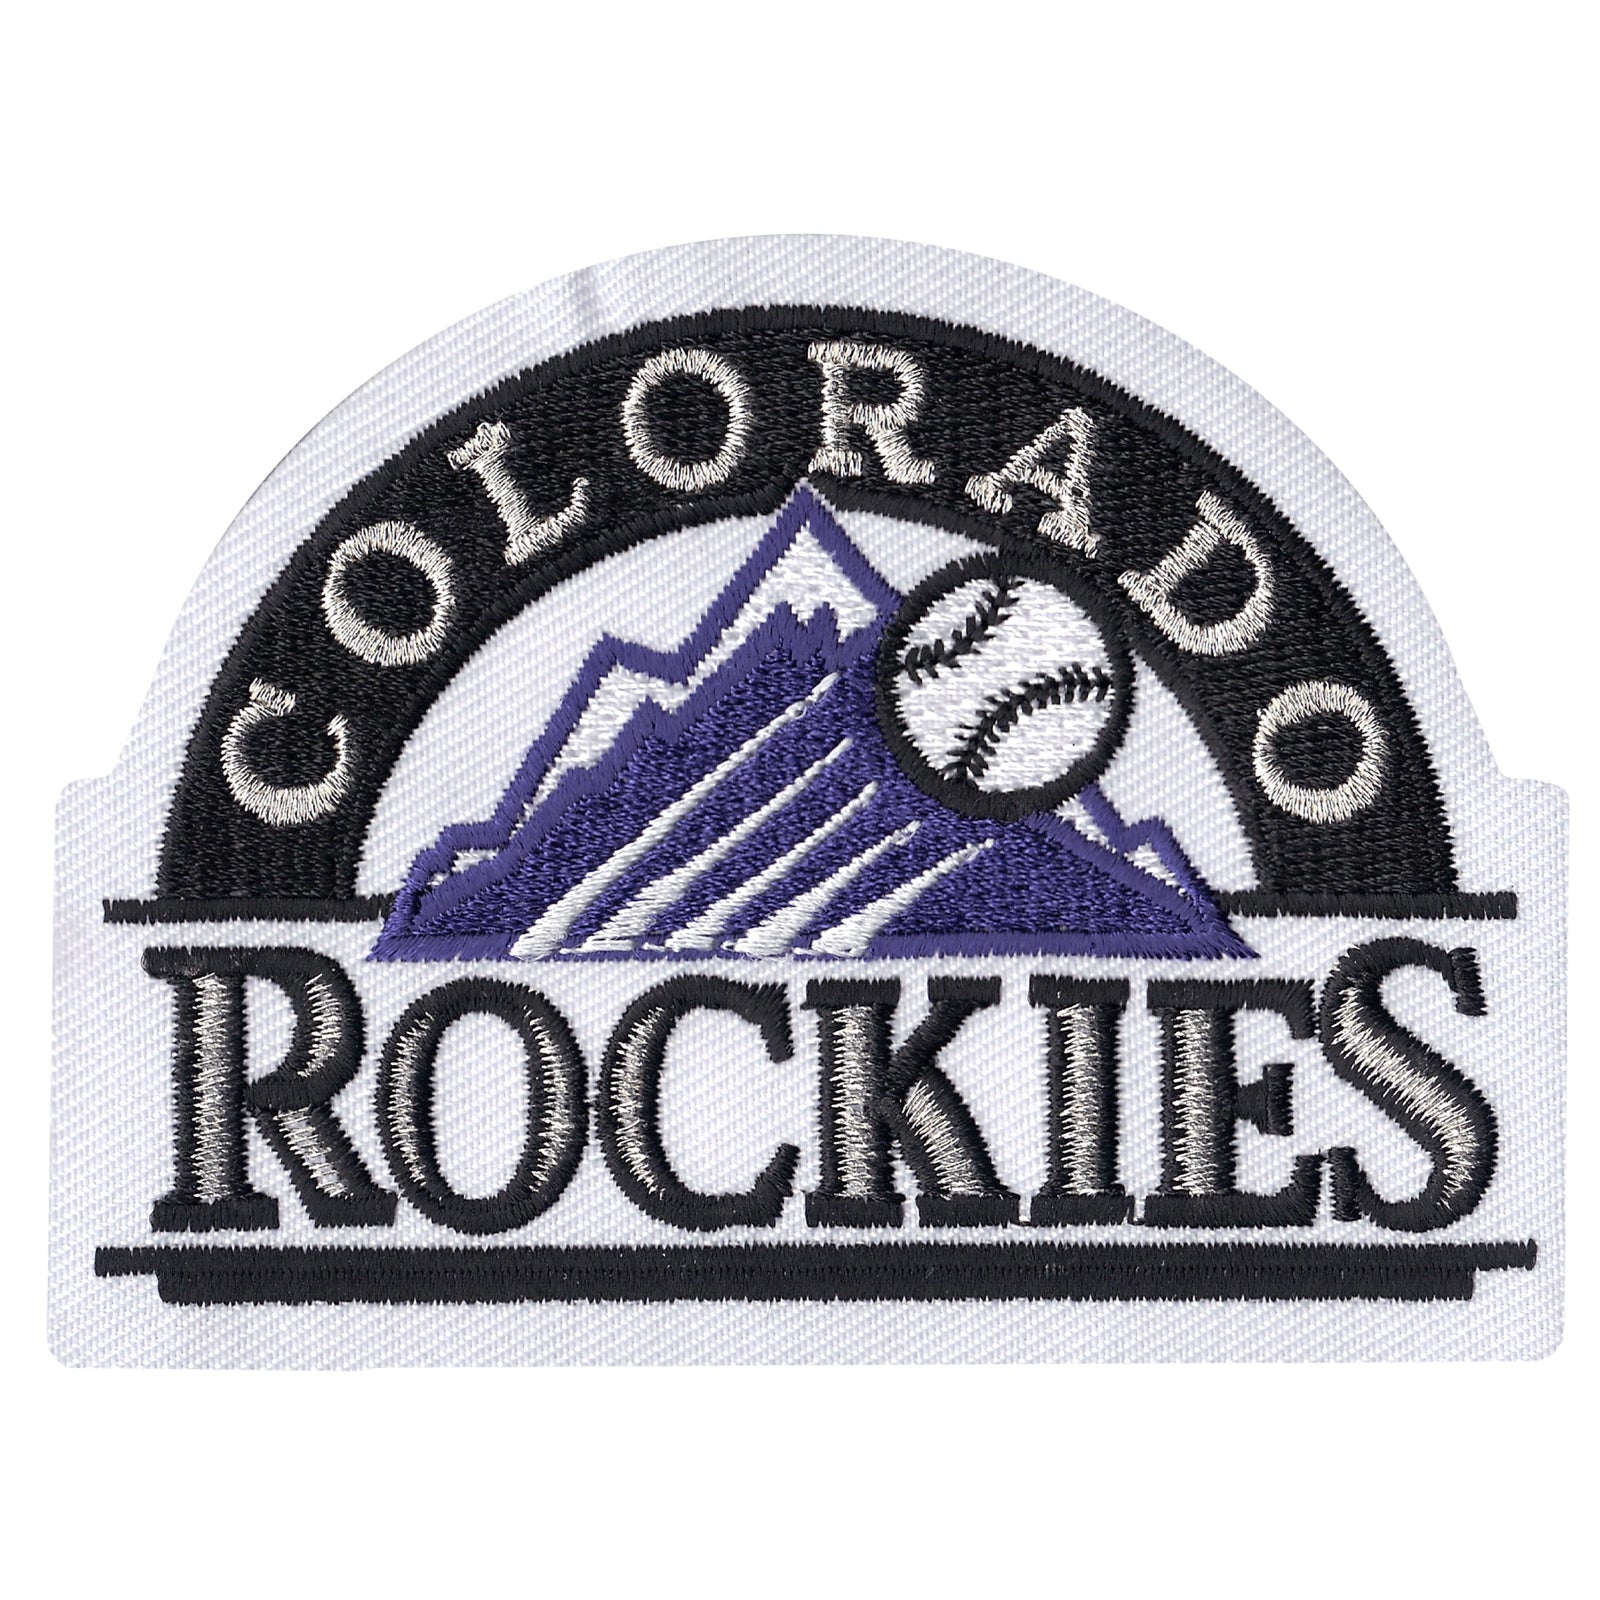 Colorado Rockies Team Sleeve Jersey Patch 